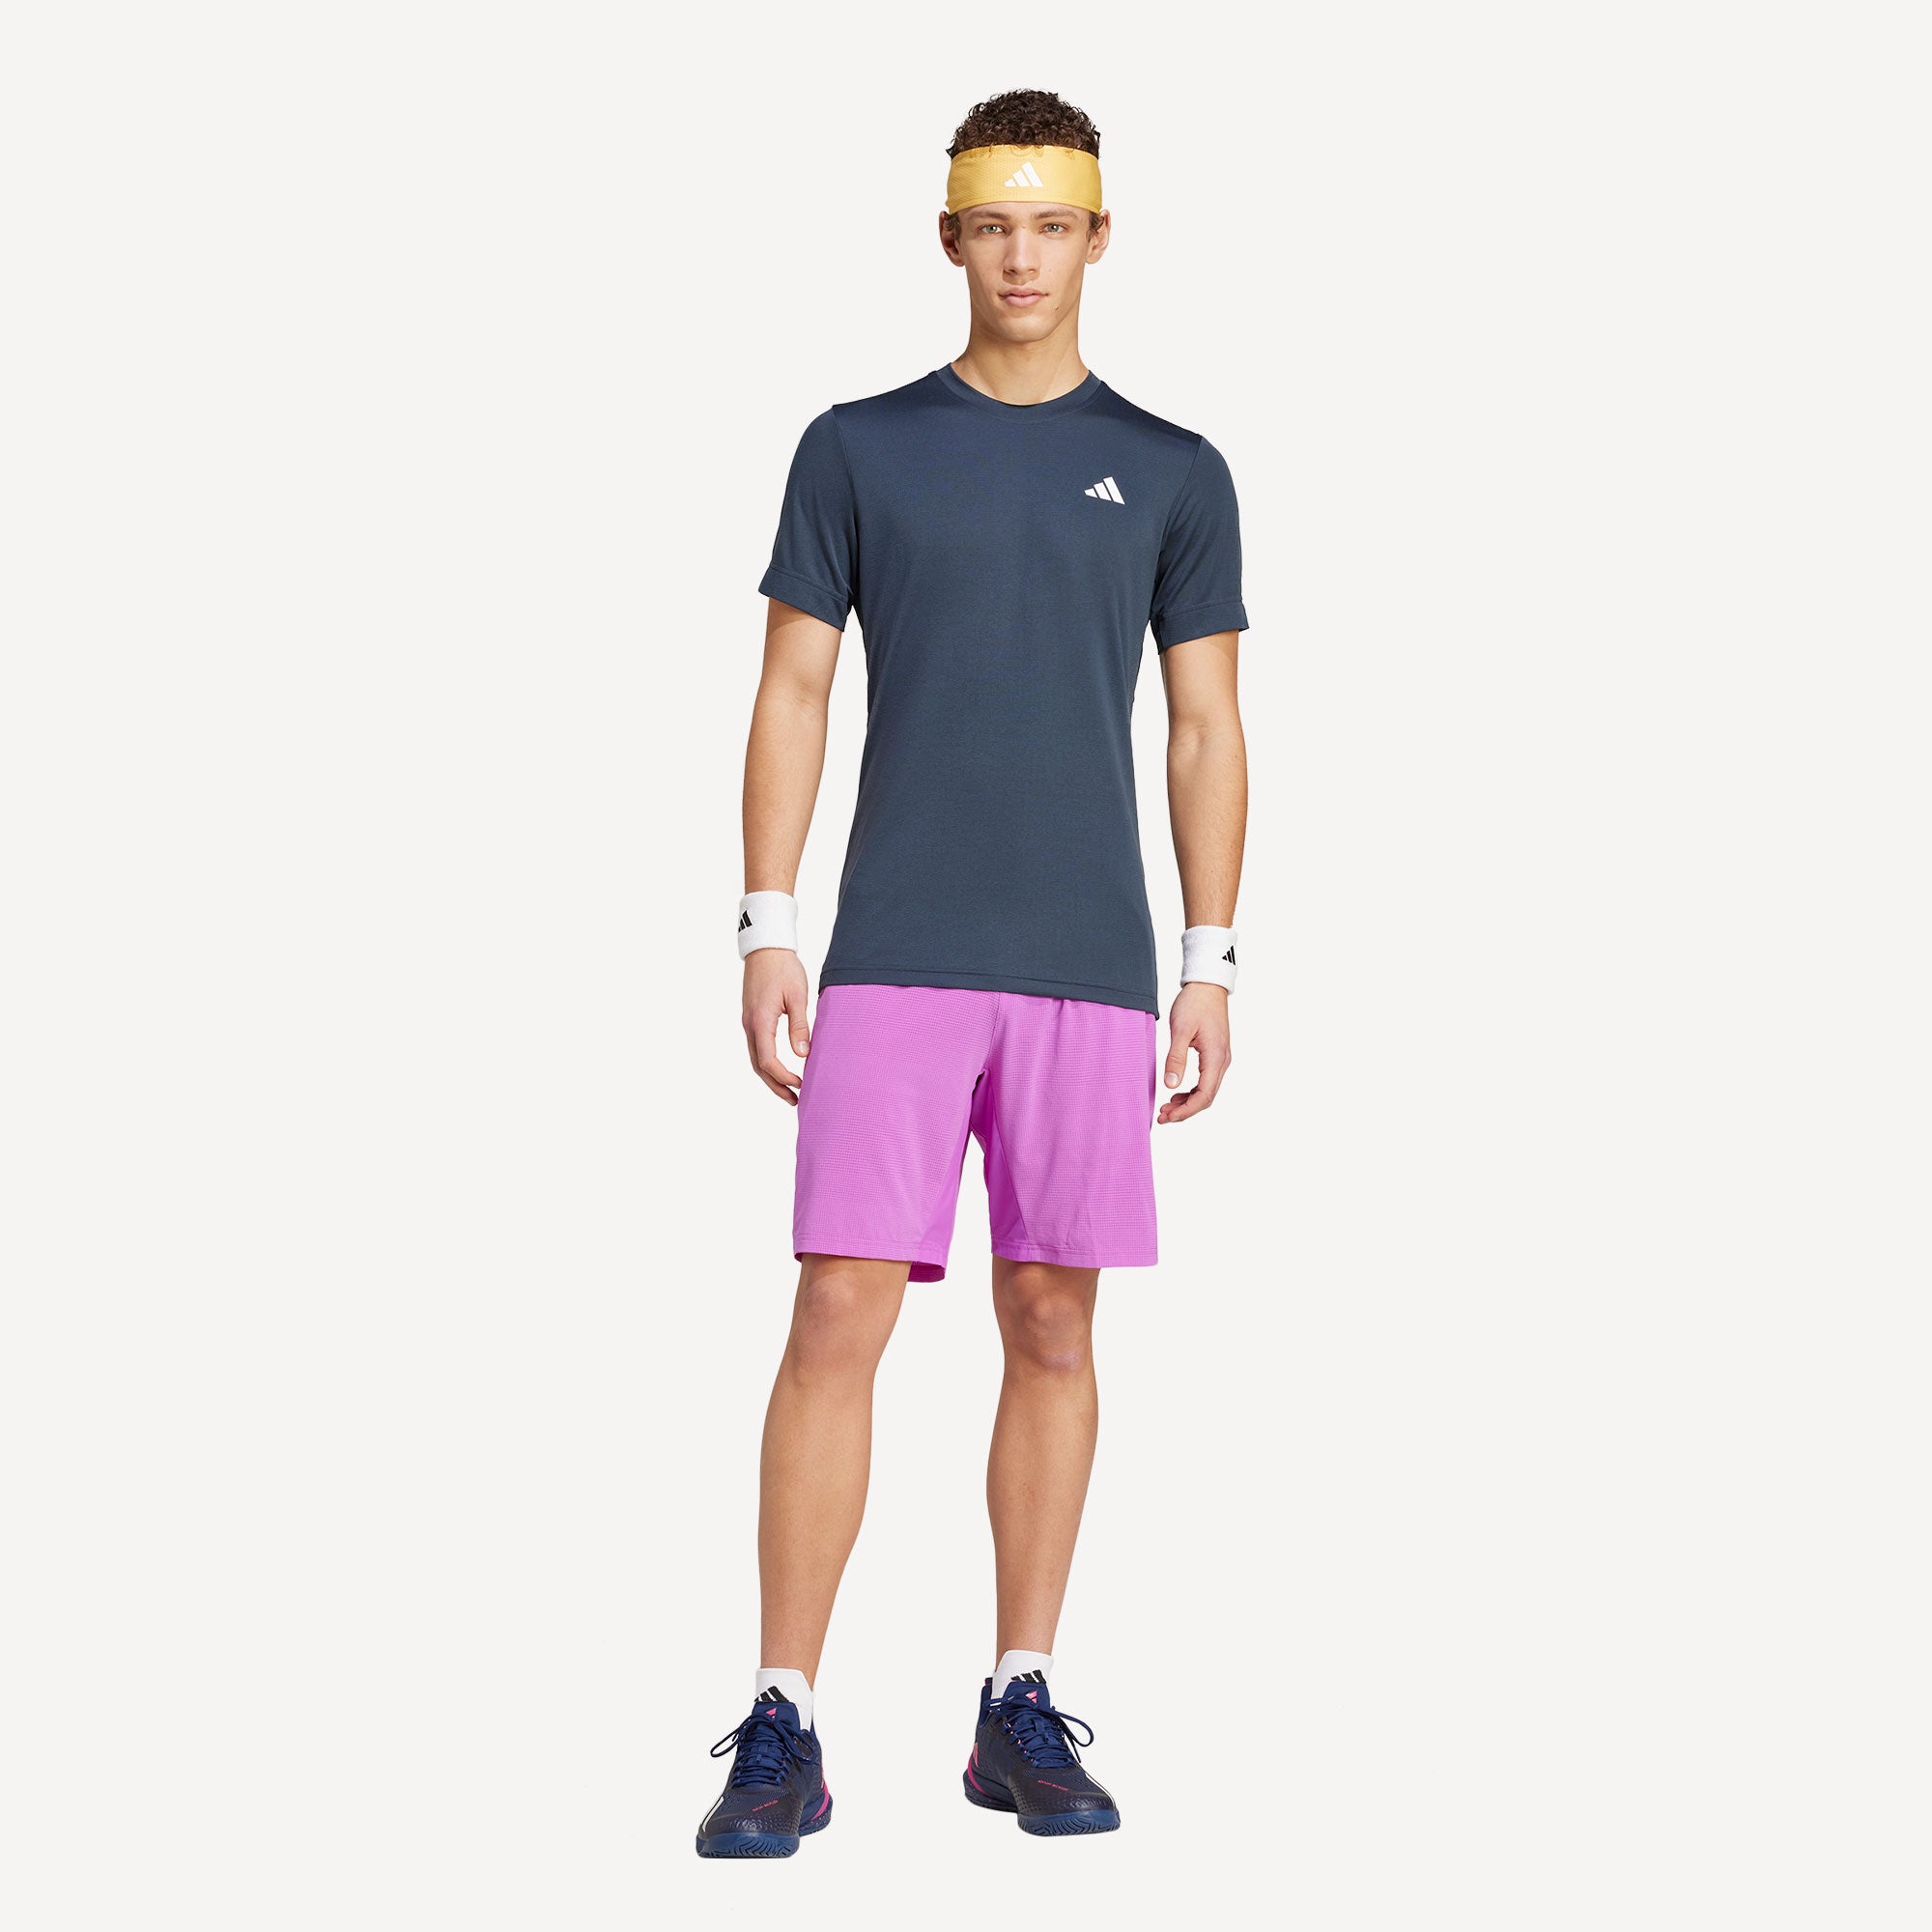 adidas Gameset Men's Freelift Tennis Shirt - Blue (4)